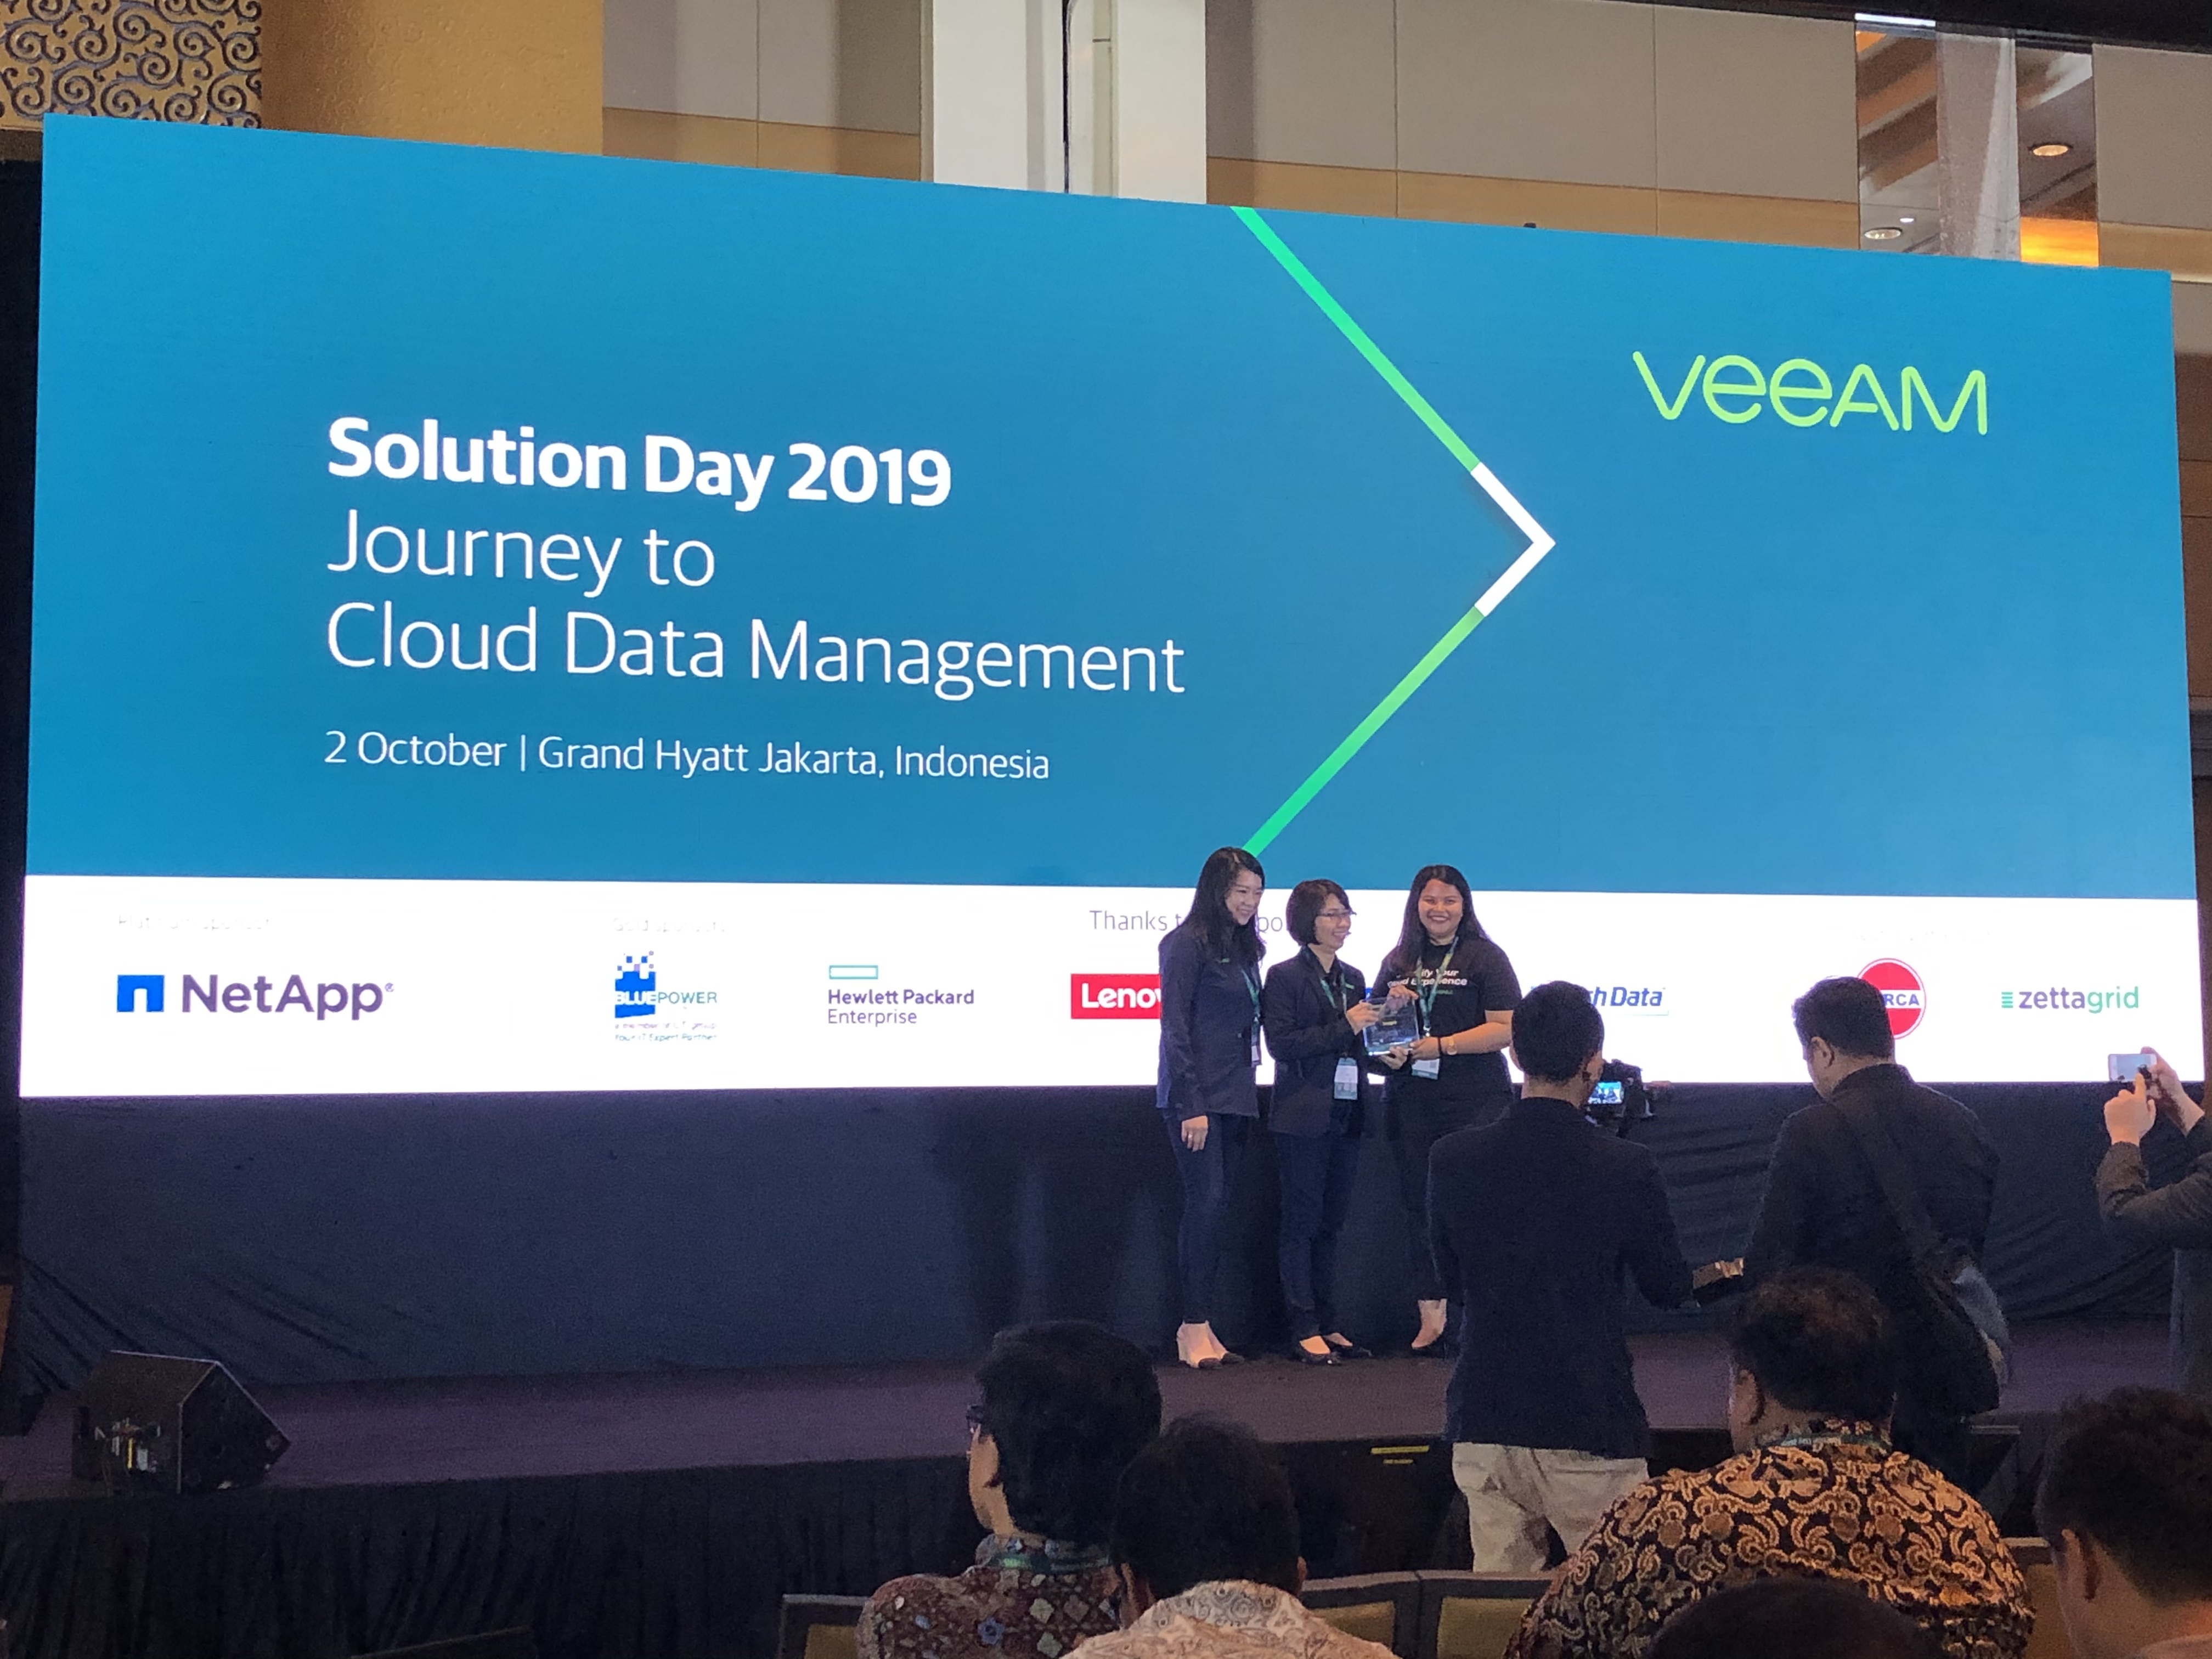 Veeam Solution Day 2019